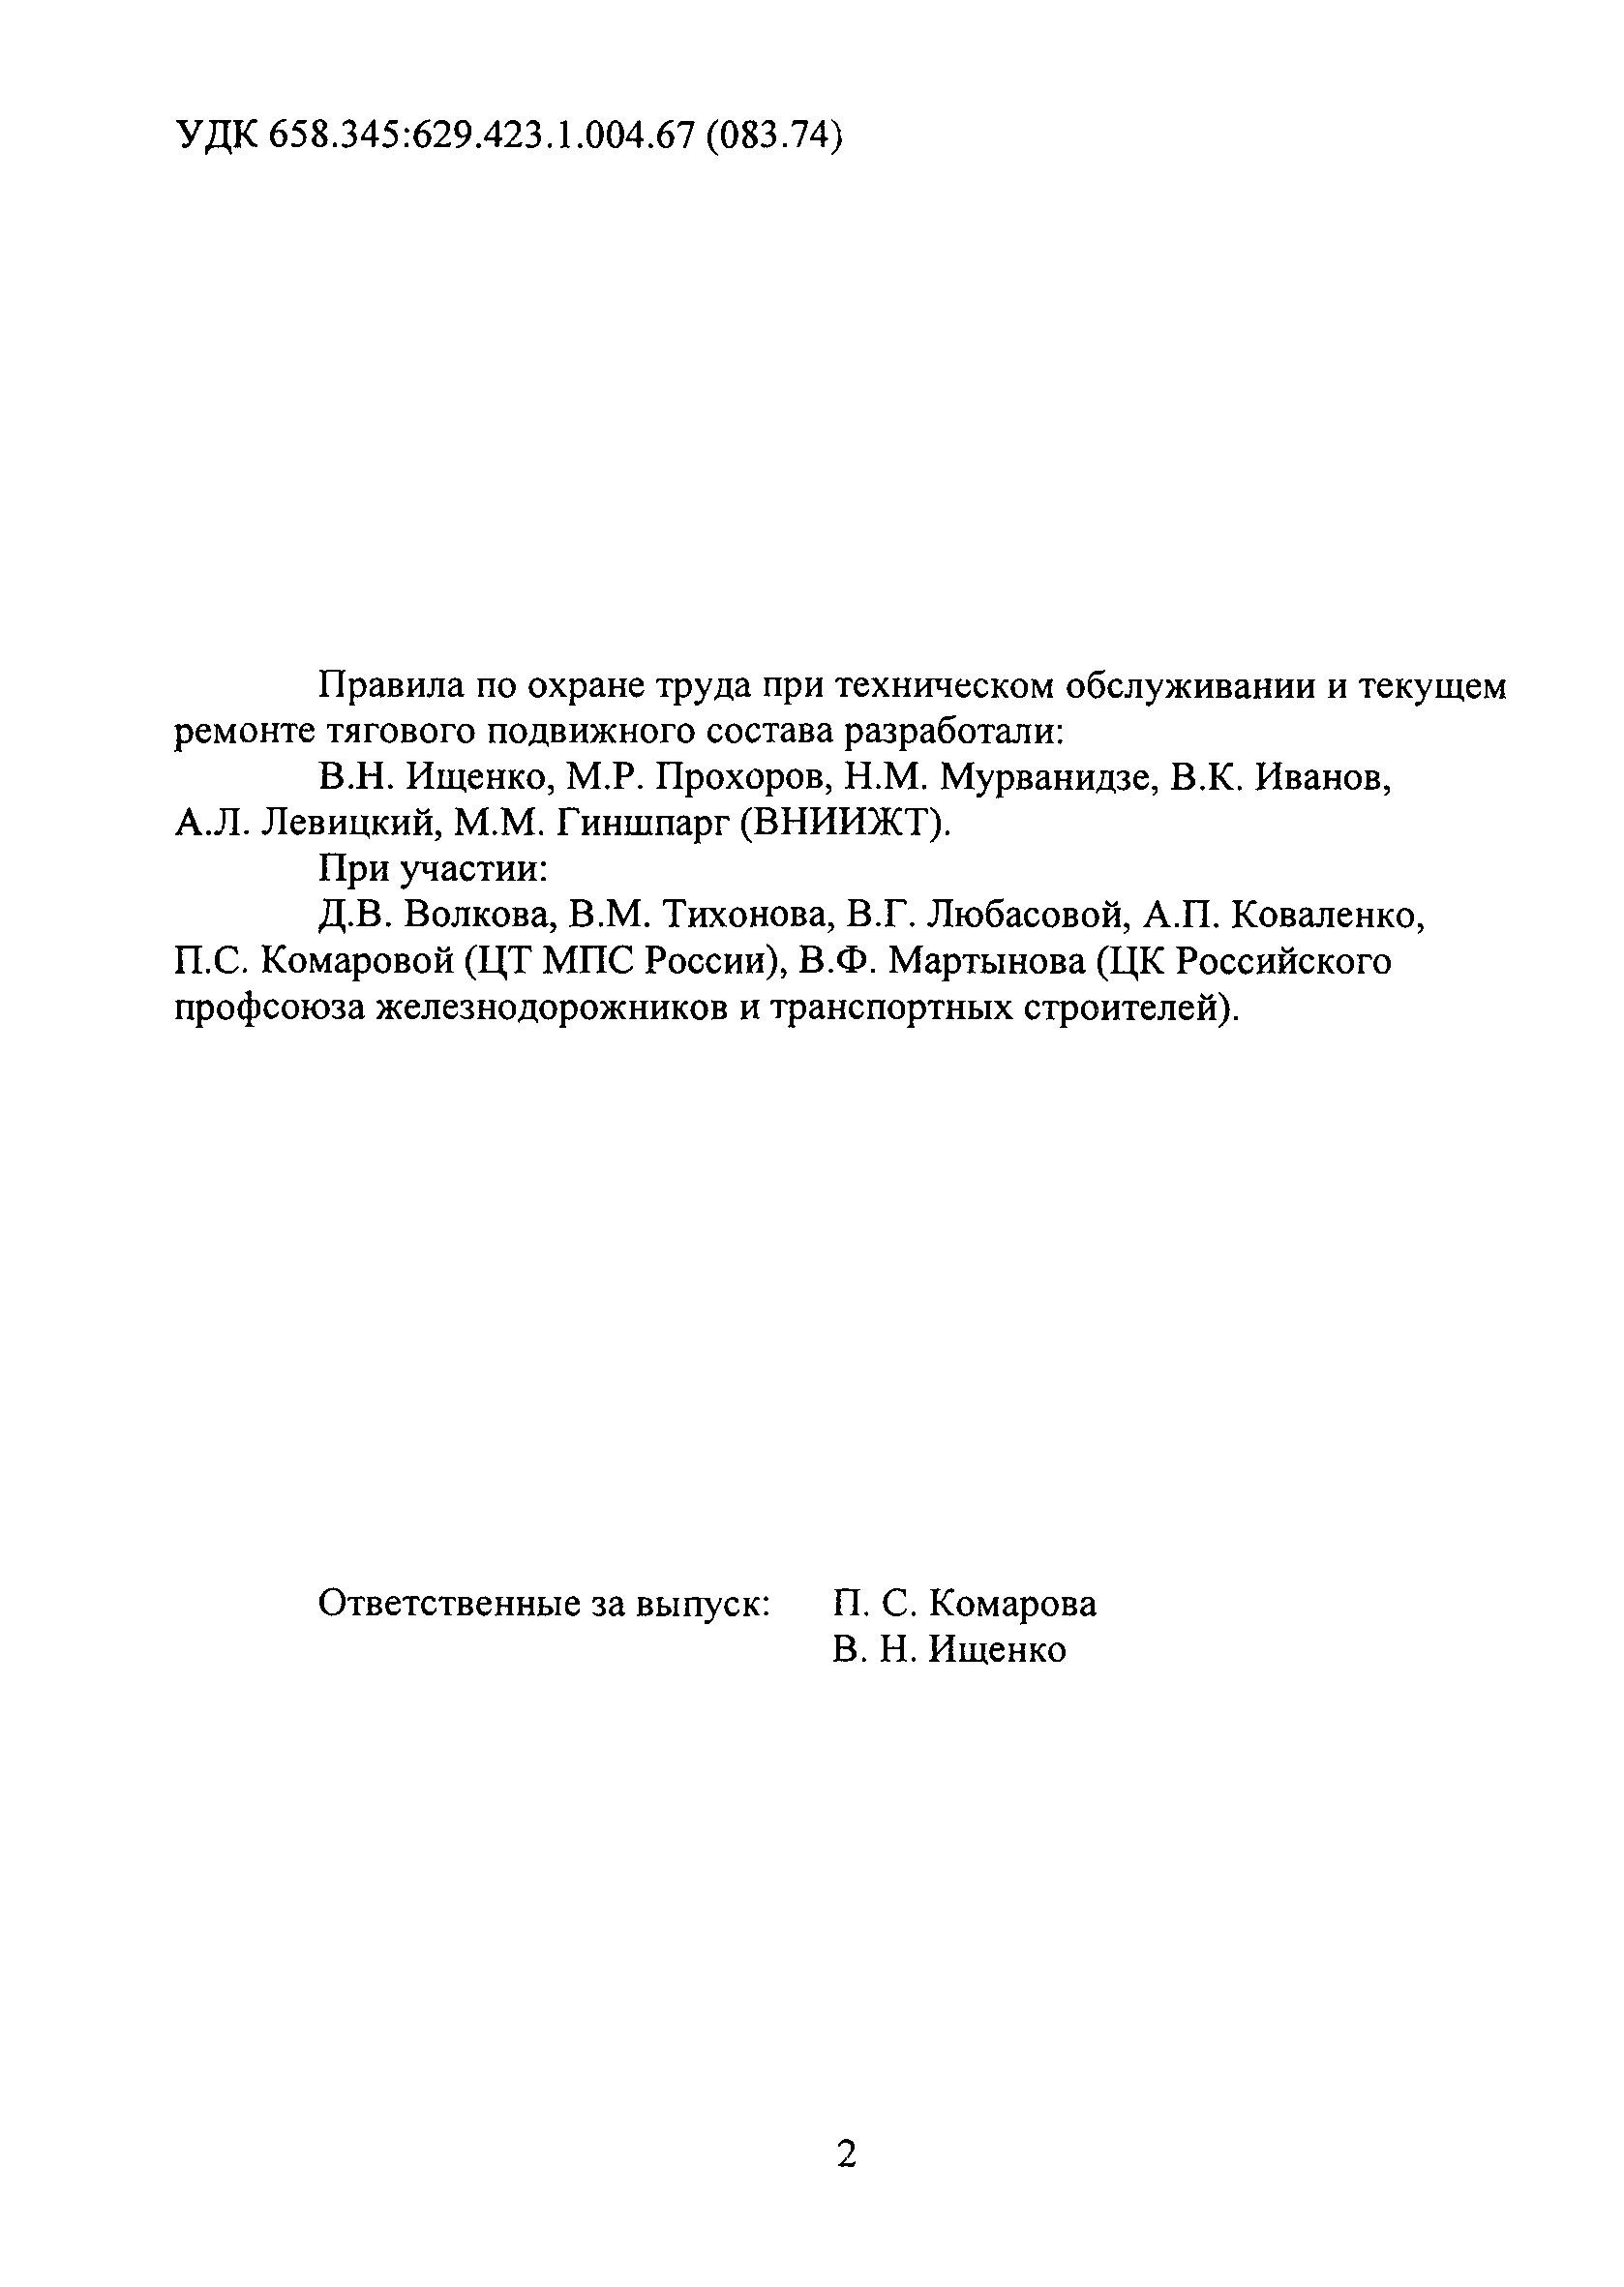 ПОТ Р О-32-ЦТ-668-99